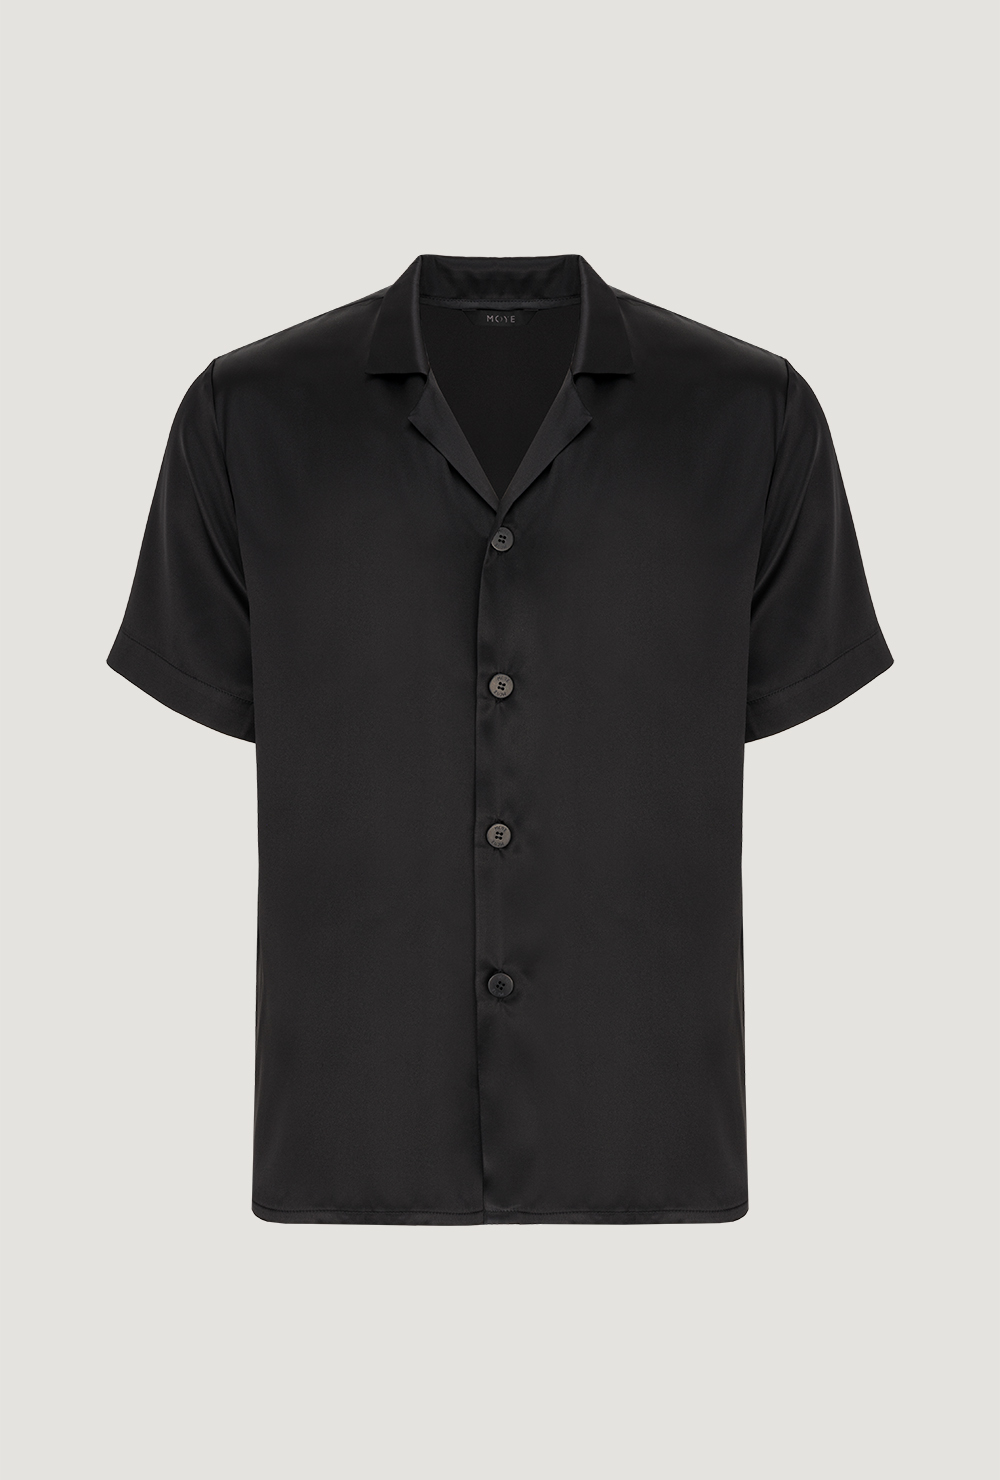 Men's black shirt